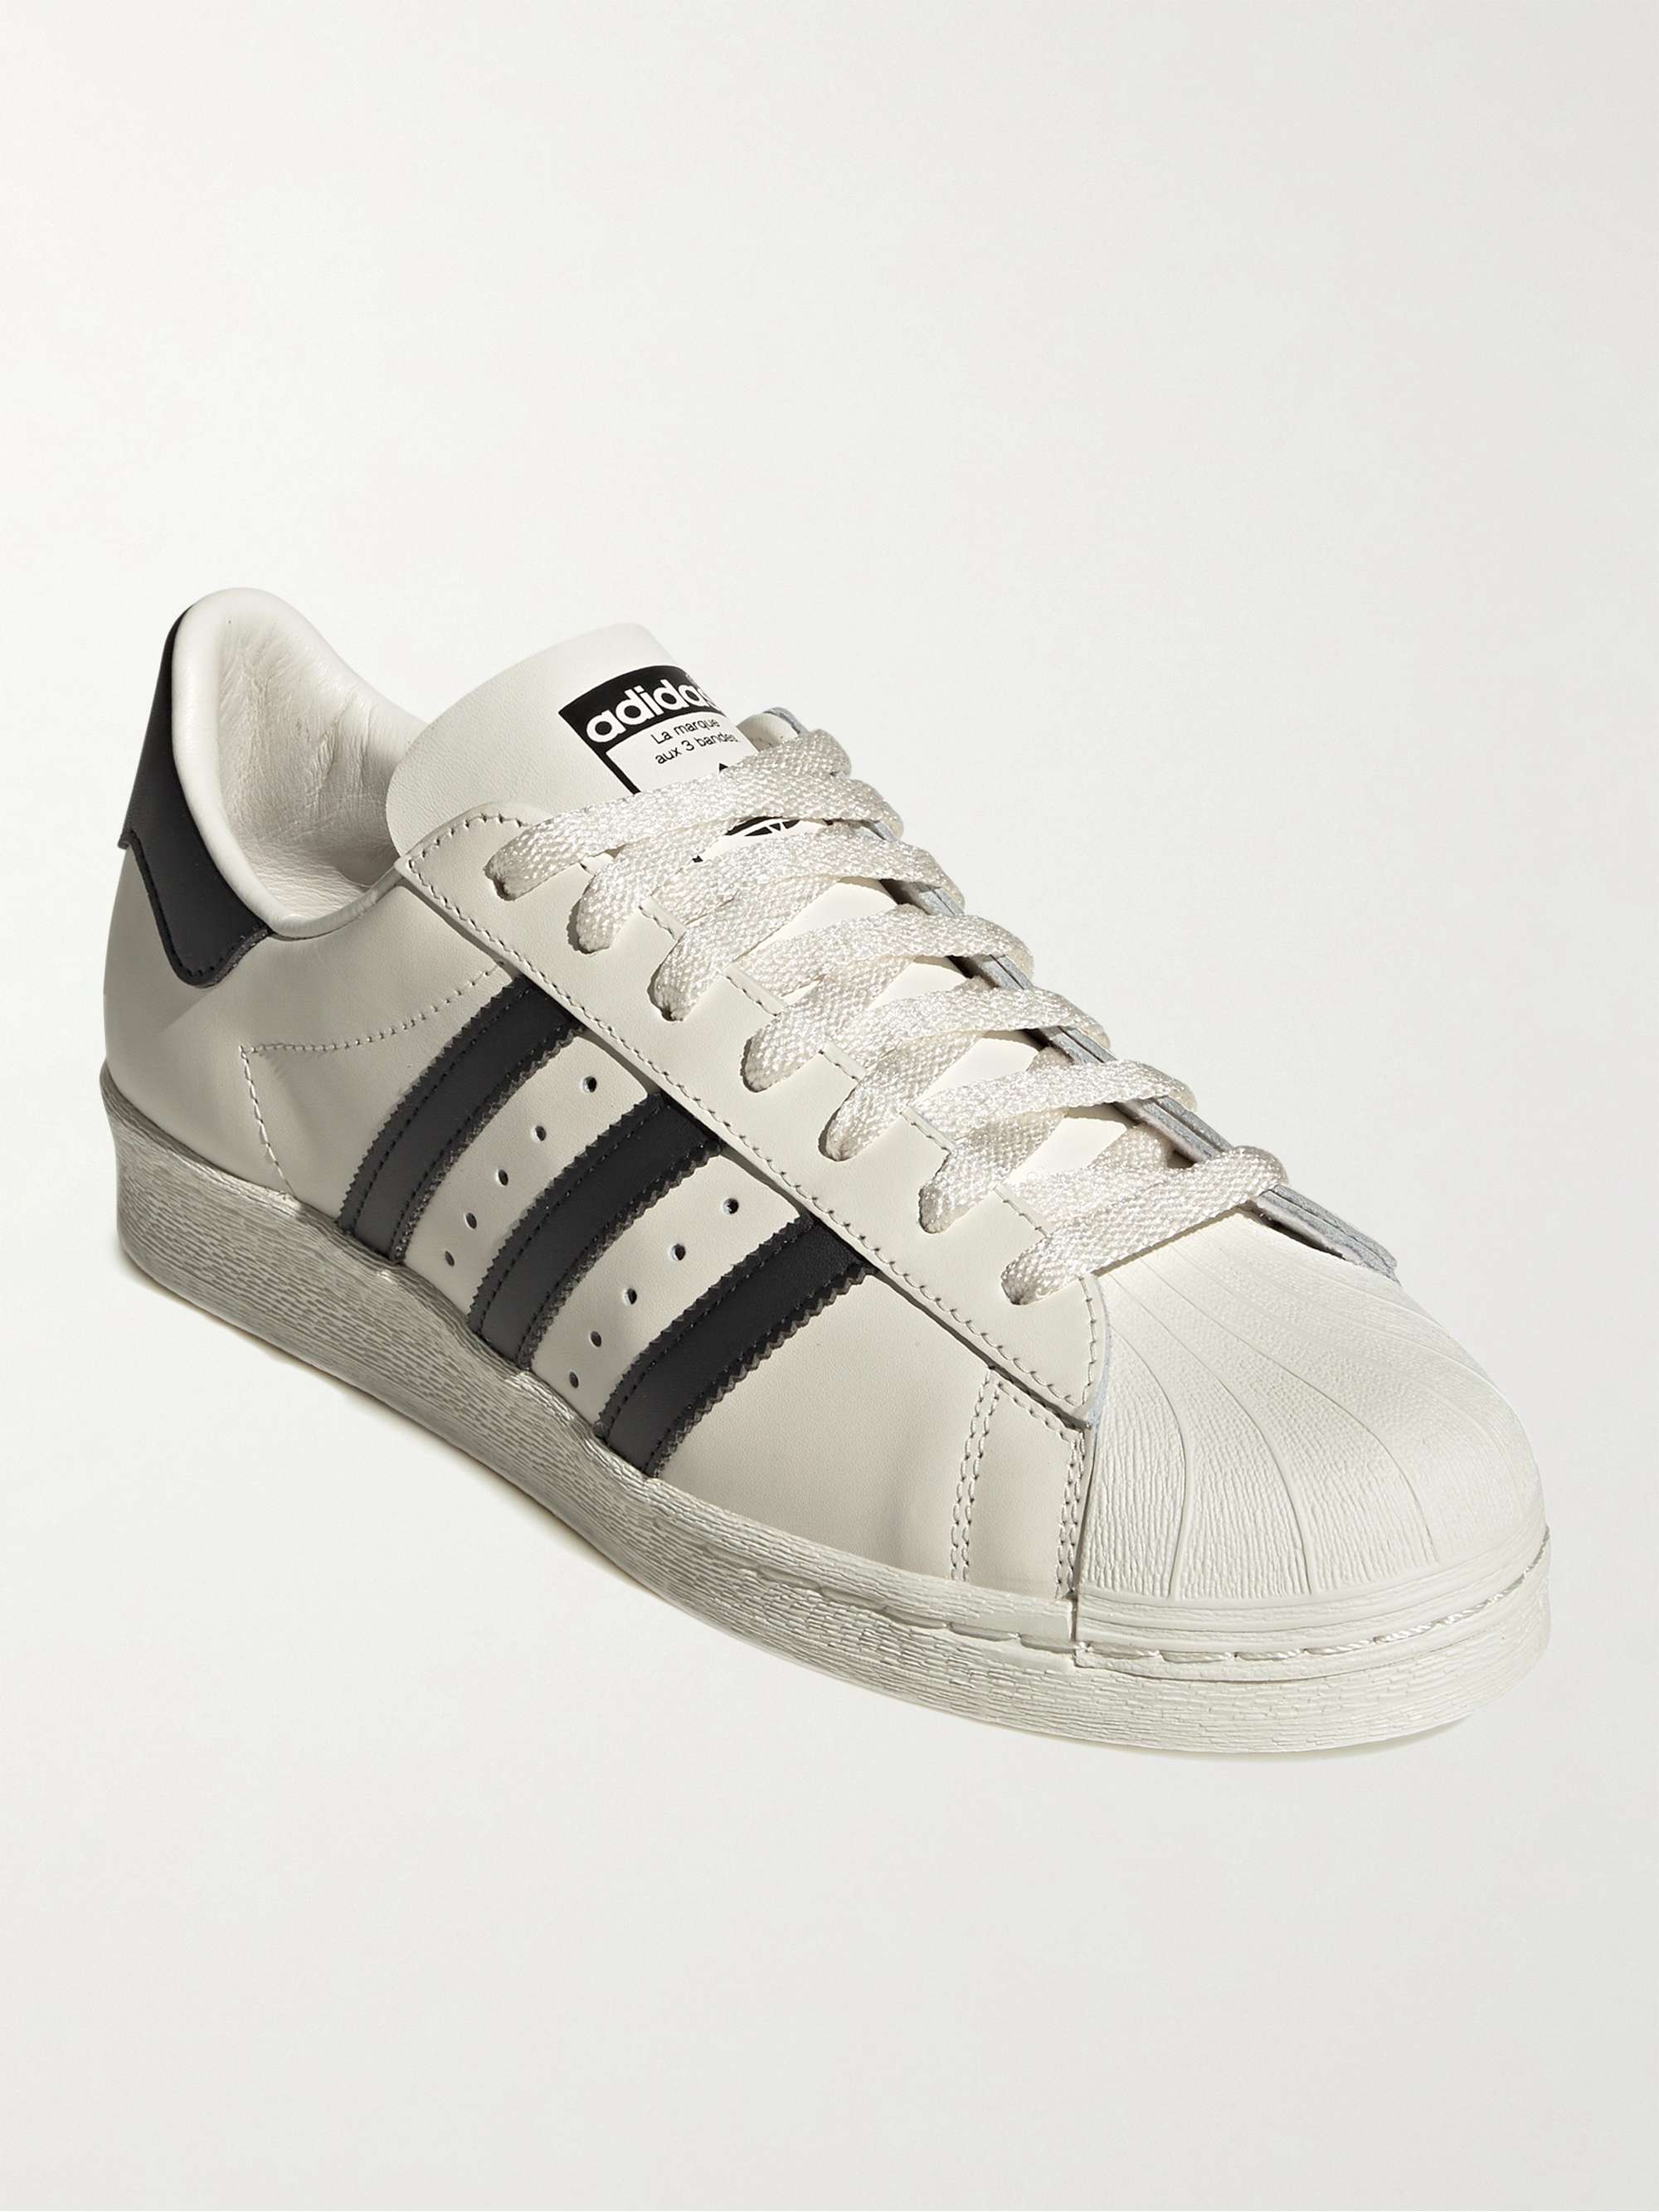 White Superstar 82 Leather Sneakers | ADIDAS ORIGINALS | MR PORTER